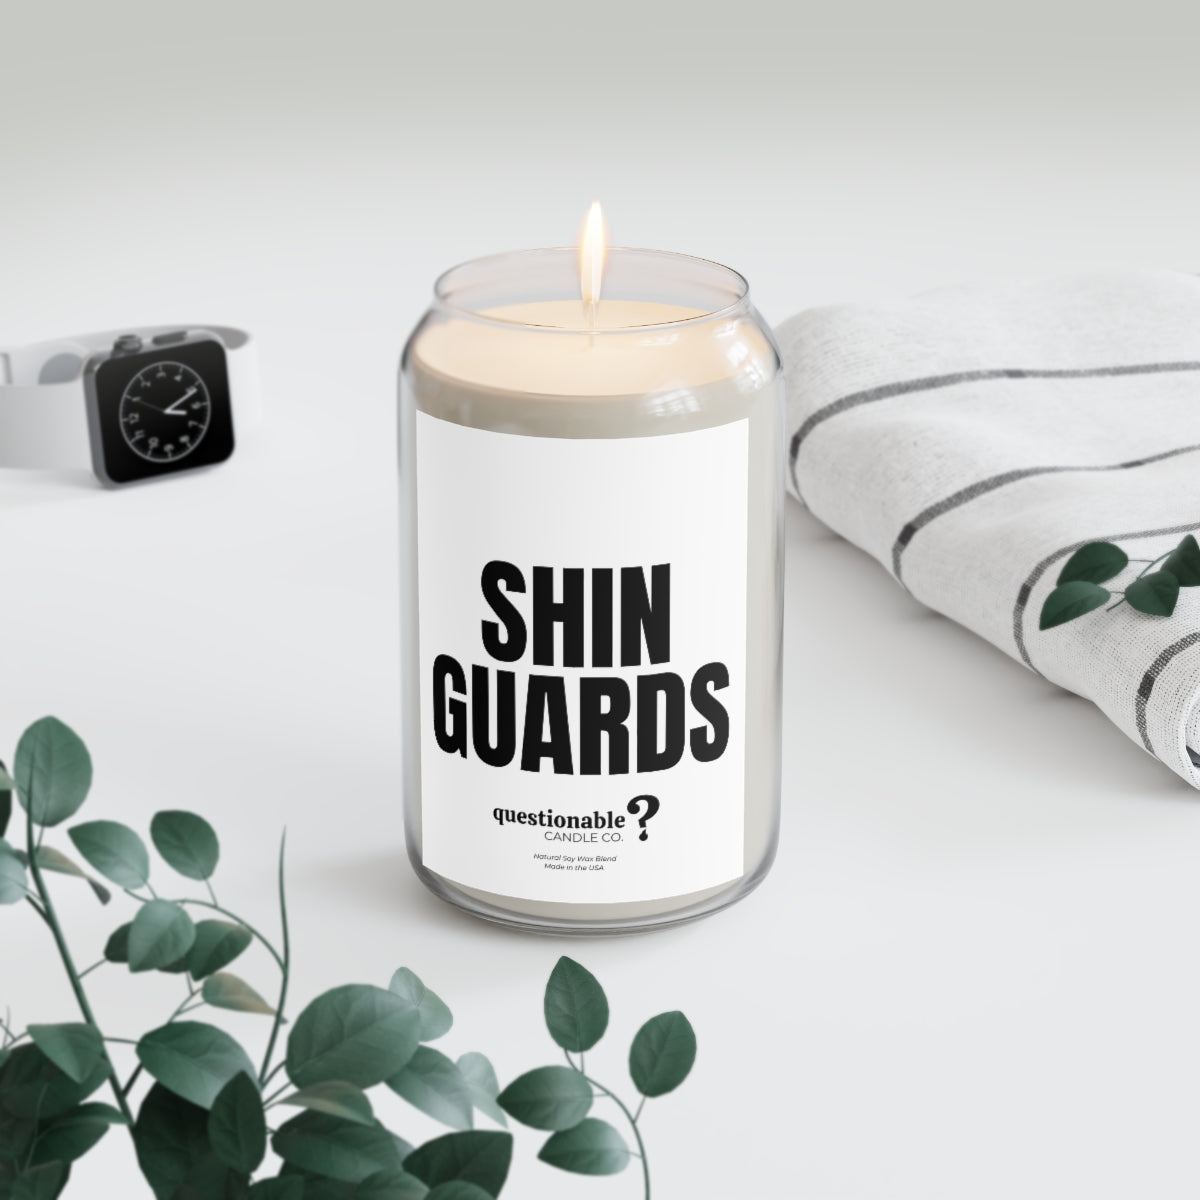 Shin Guards Candle